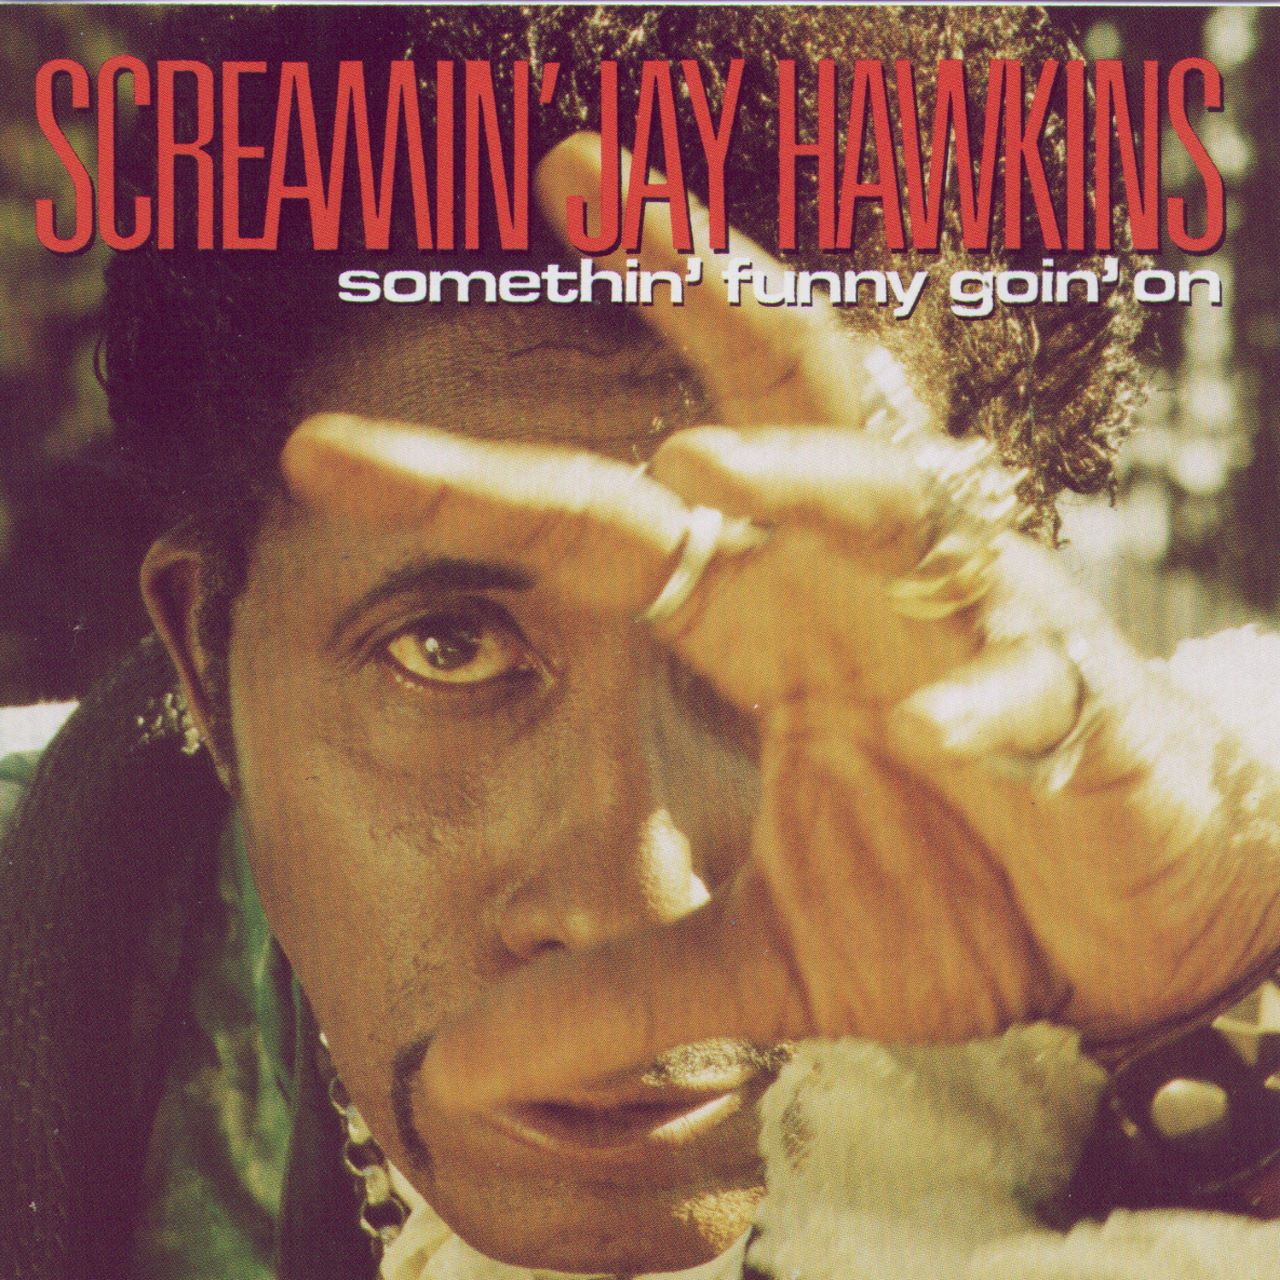 Screamin’ Jay Hawkins – Somethin’ Funny Goin’ On cover album